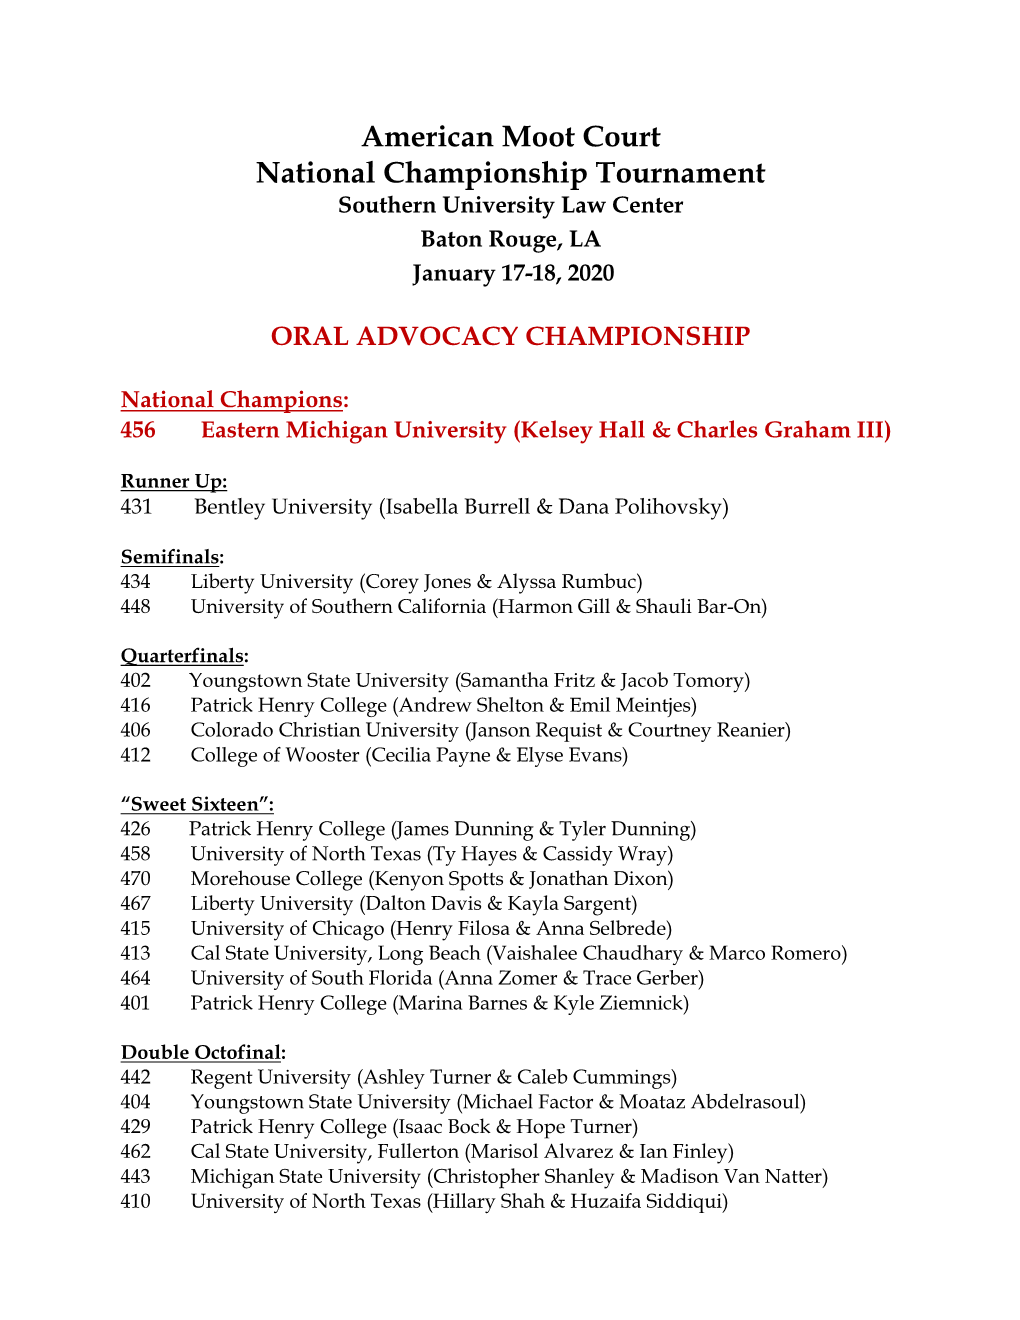 American Moot Court National Championship Tournament Southern University Law Center Baton Rouge, LA January 17-18, 2020